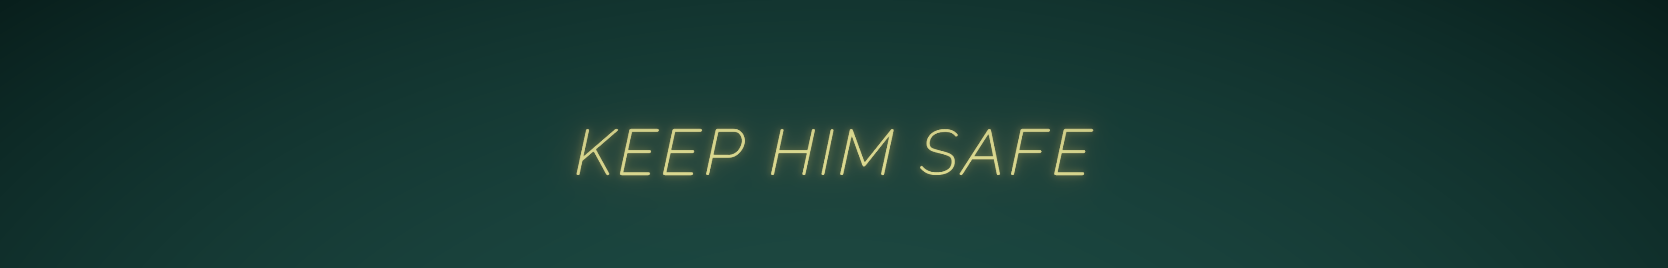 Keep Him Safe